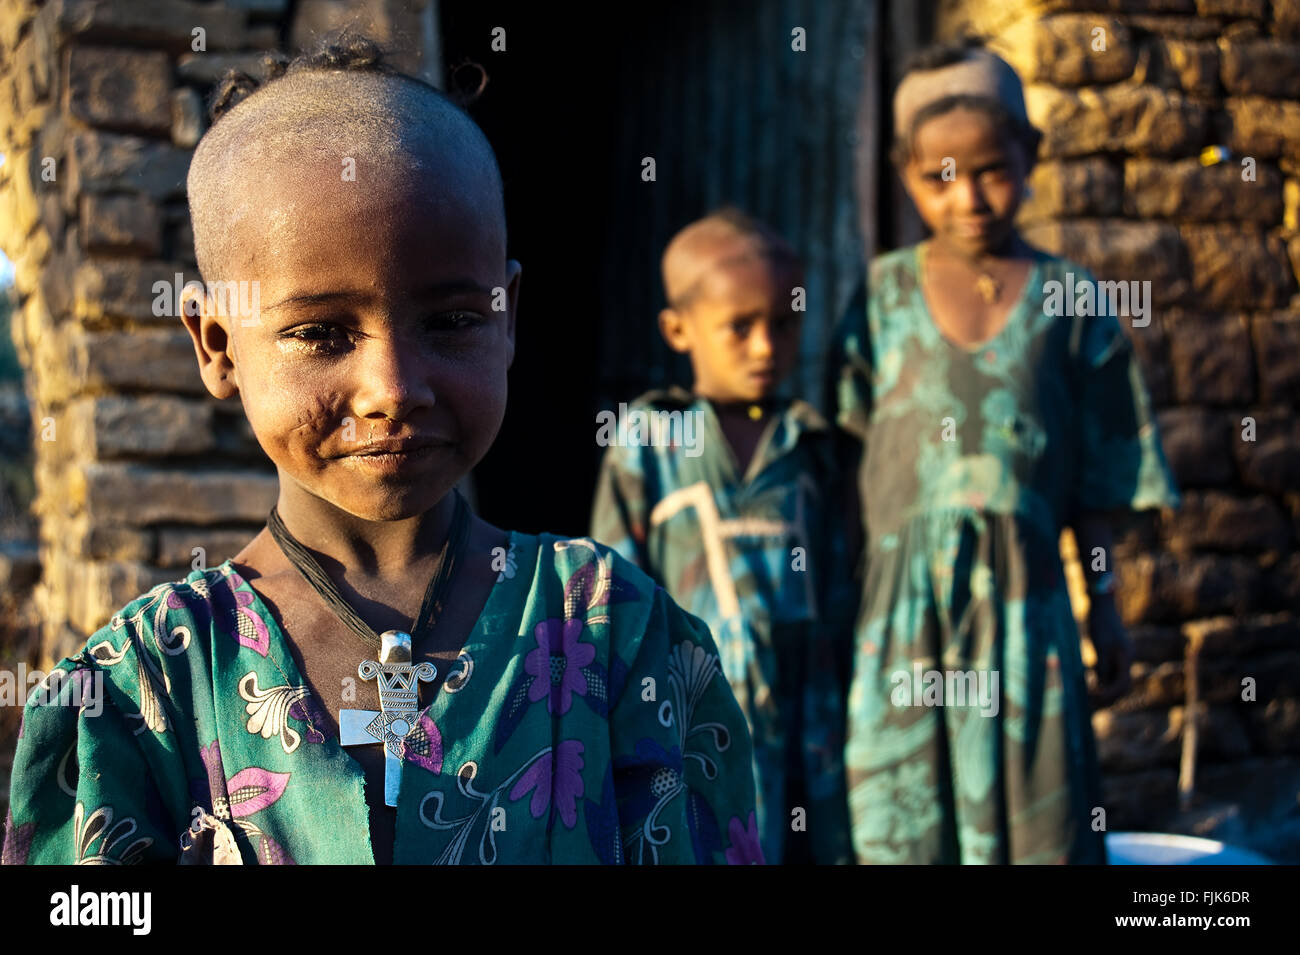 children-belonging-to-the-agaw-people-ethiopia-FJK6DR.jpg